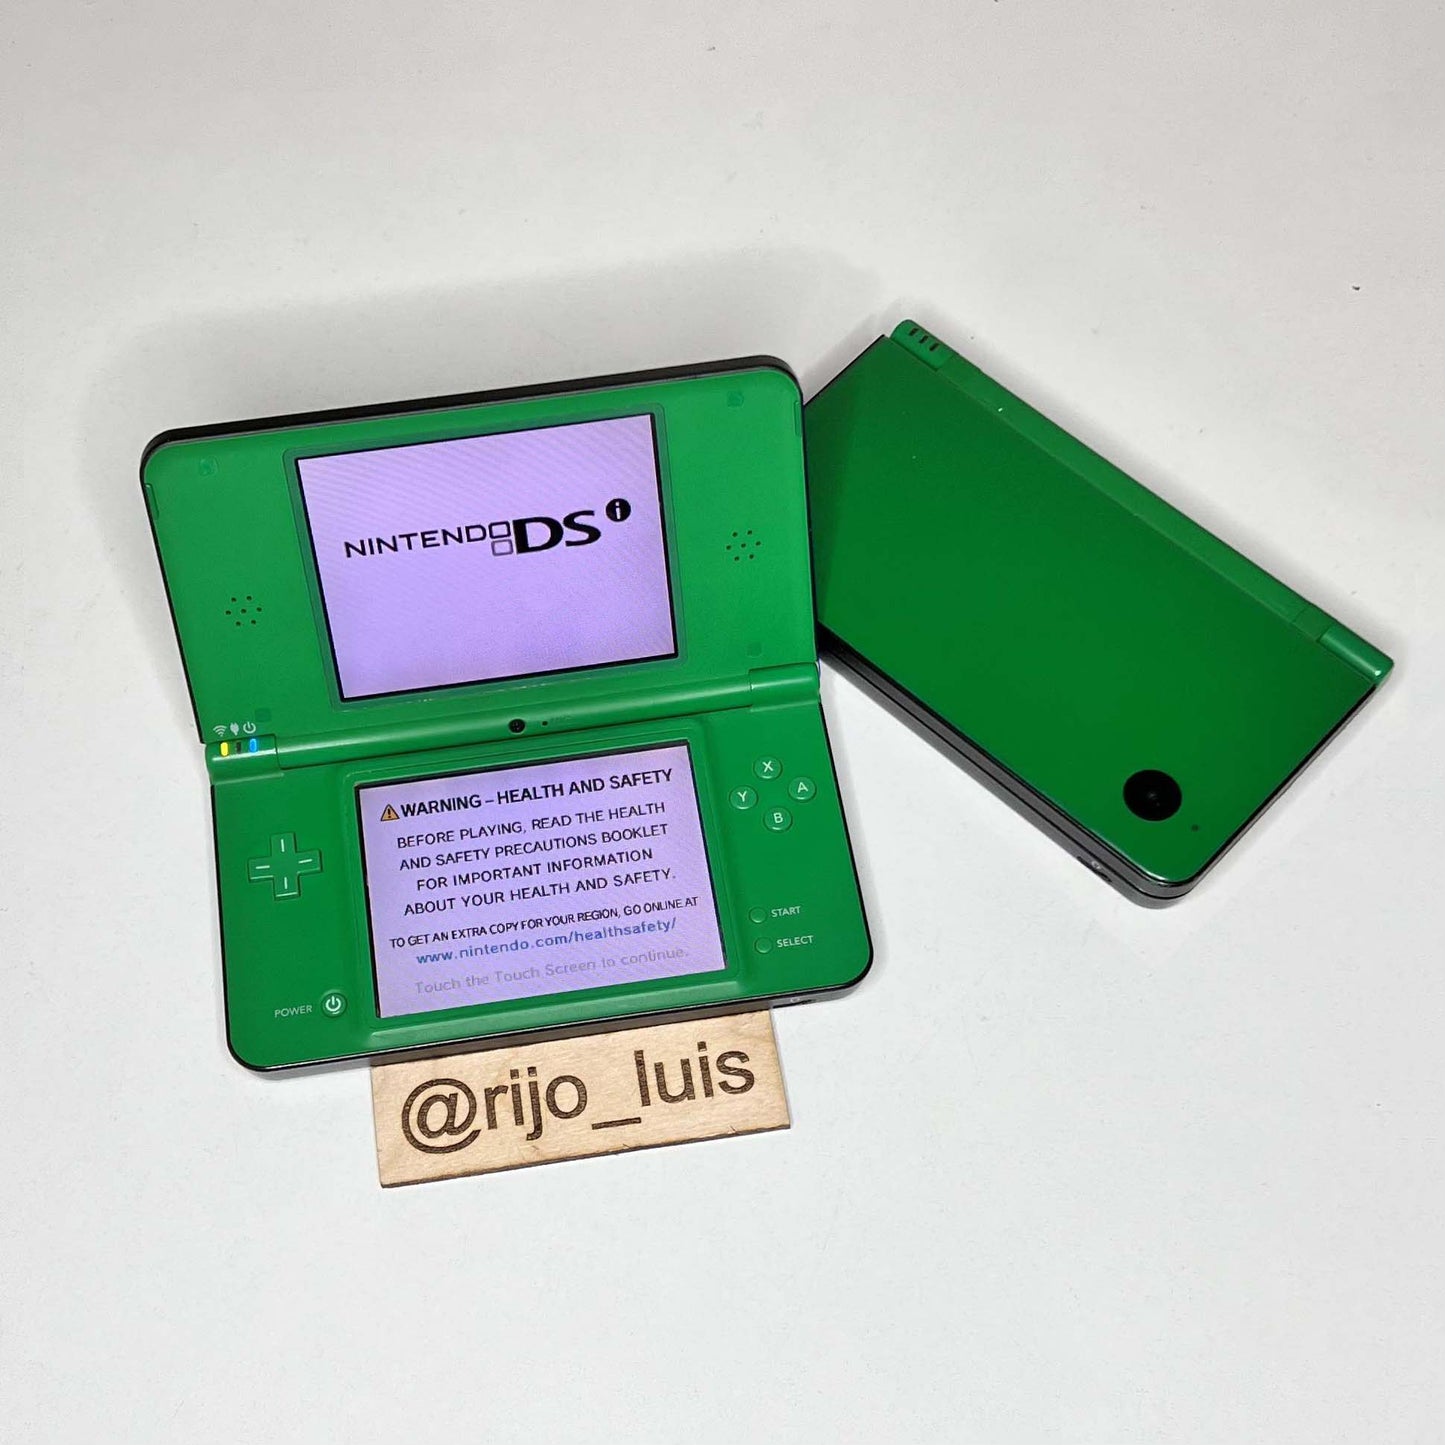 Nintendo DSi XL with Games